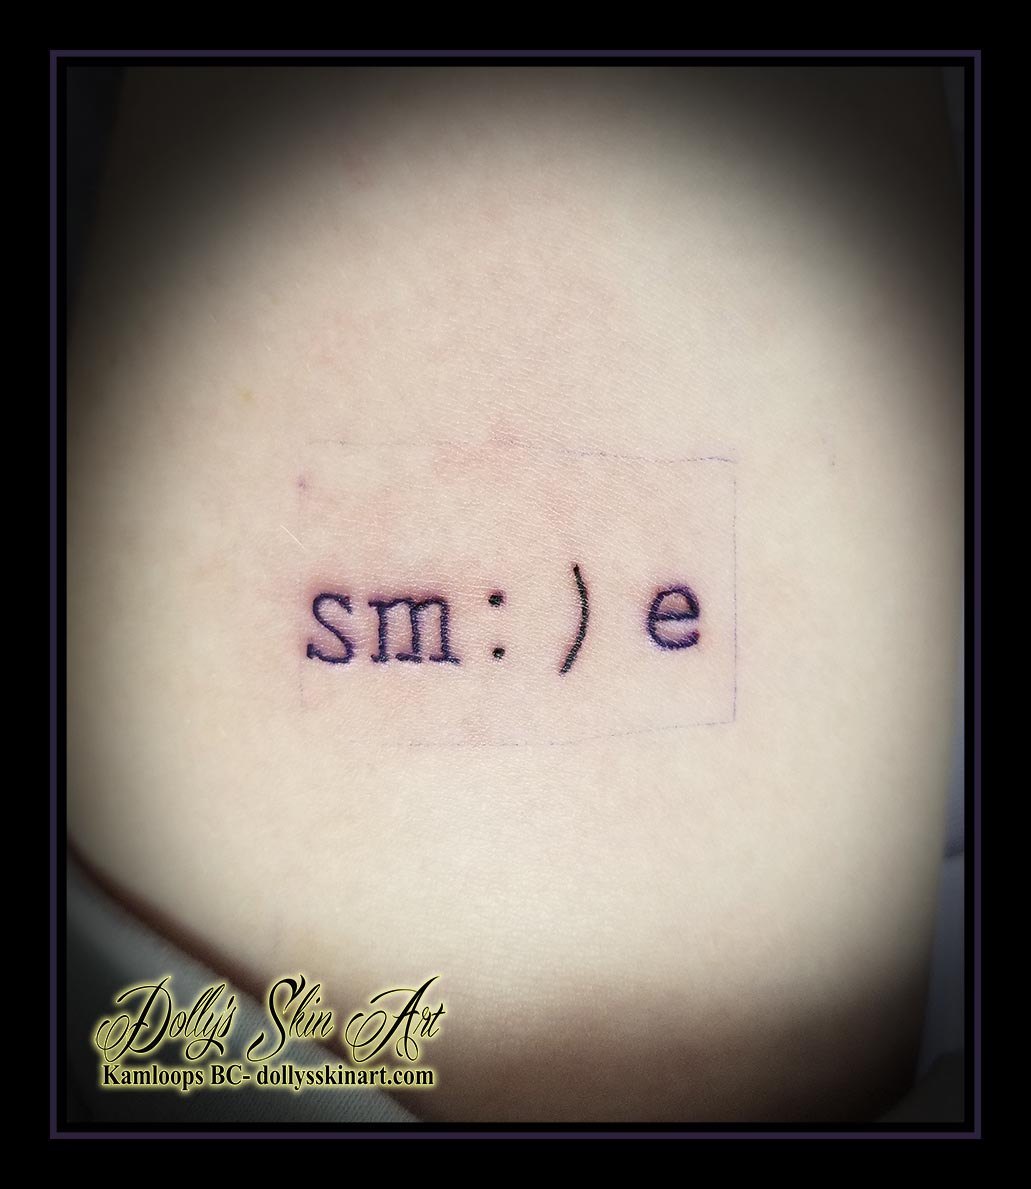 sm:)e tattoo smile lettering typewriter font script :) tattoo kamloops dolly's skin art